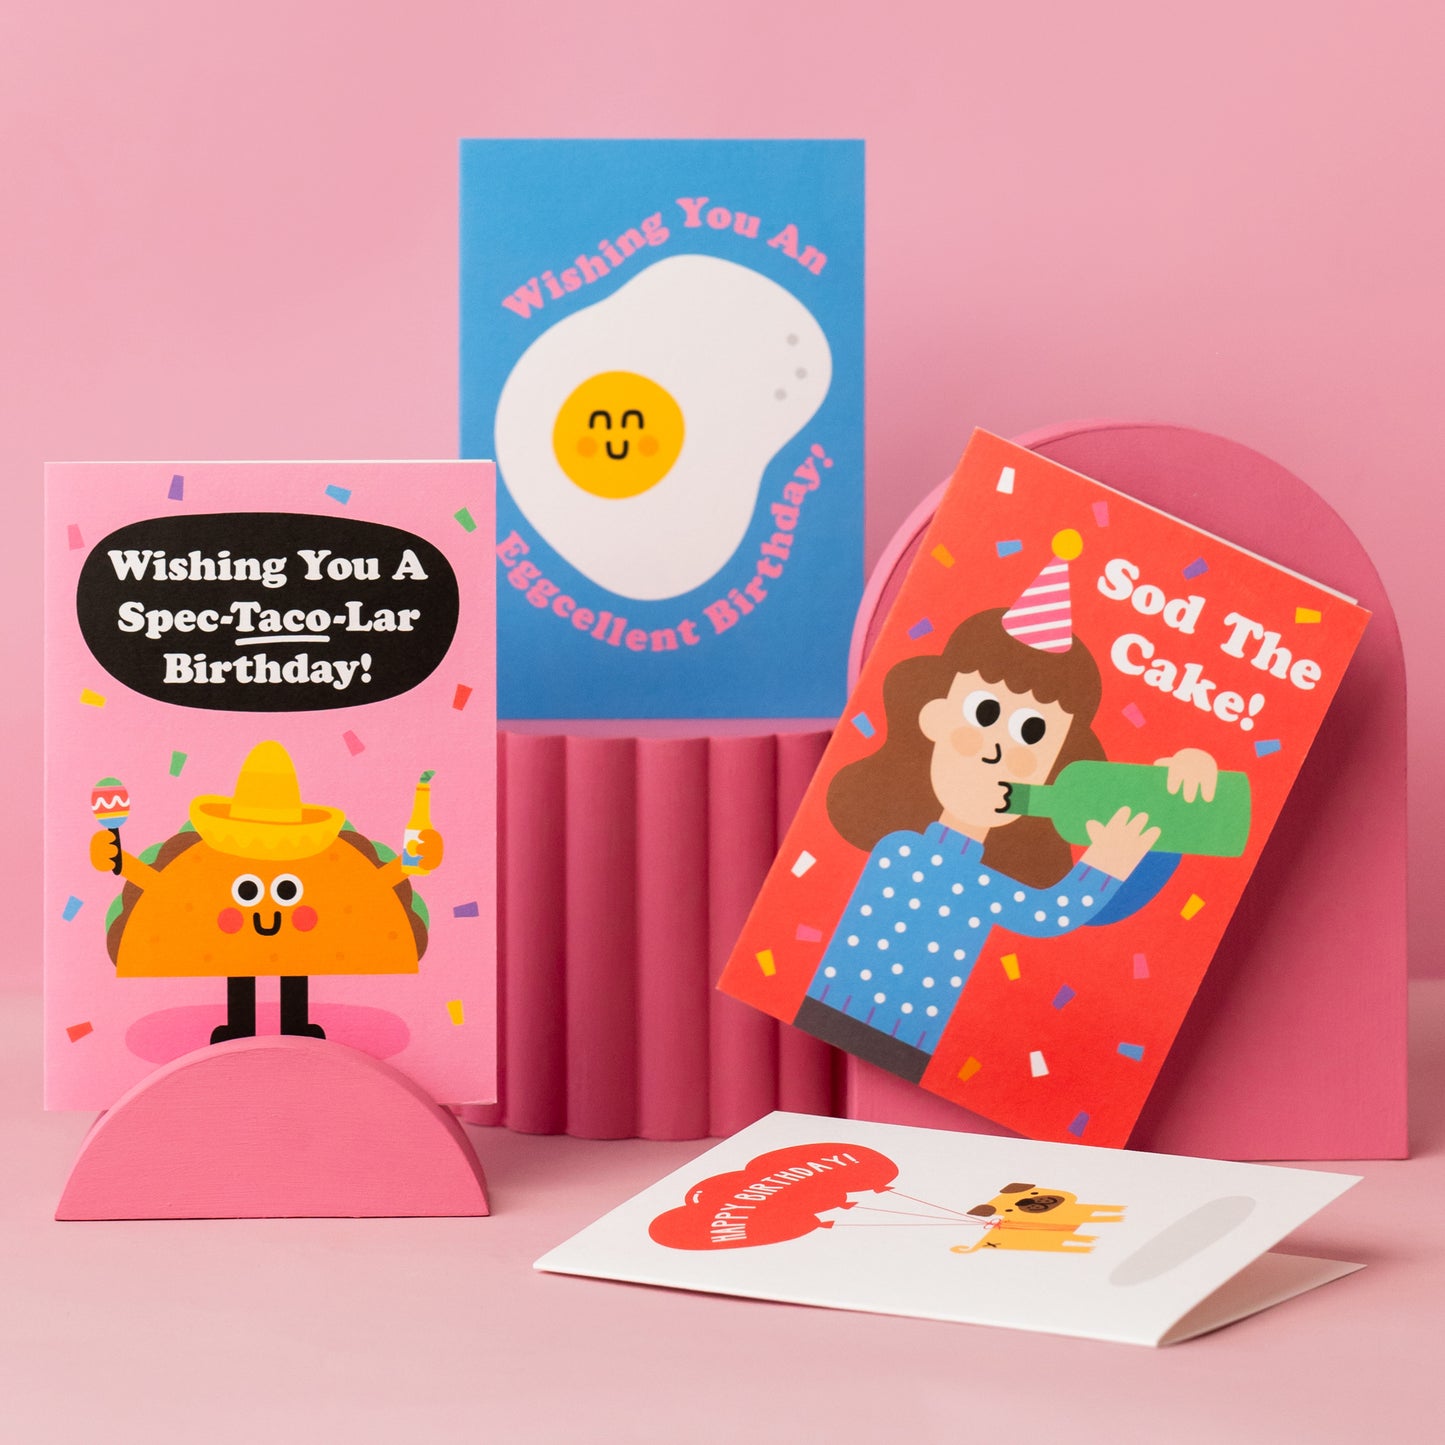 I've Seen You Poop! (But I Still Love You) Valentines Card